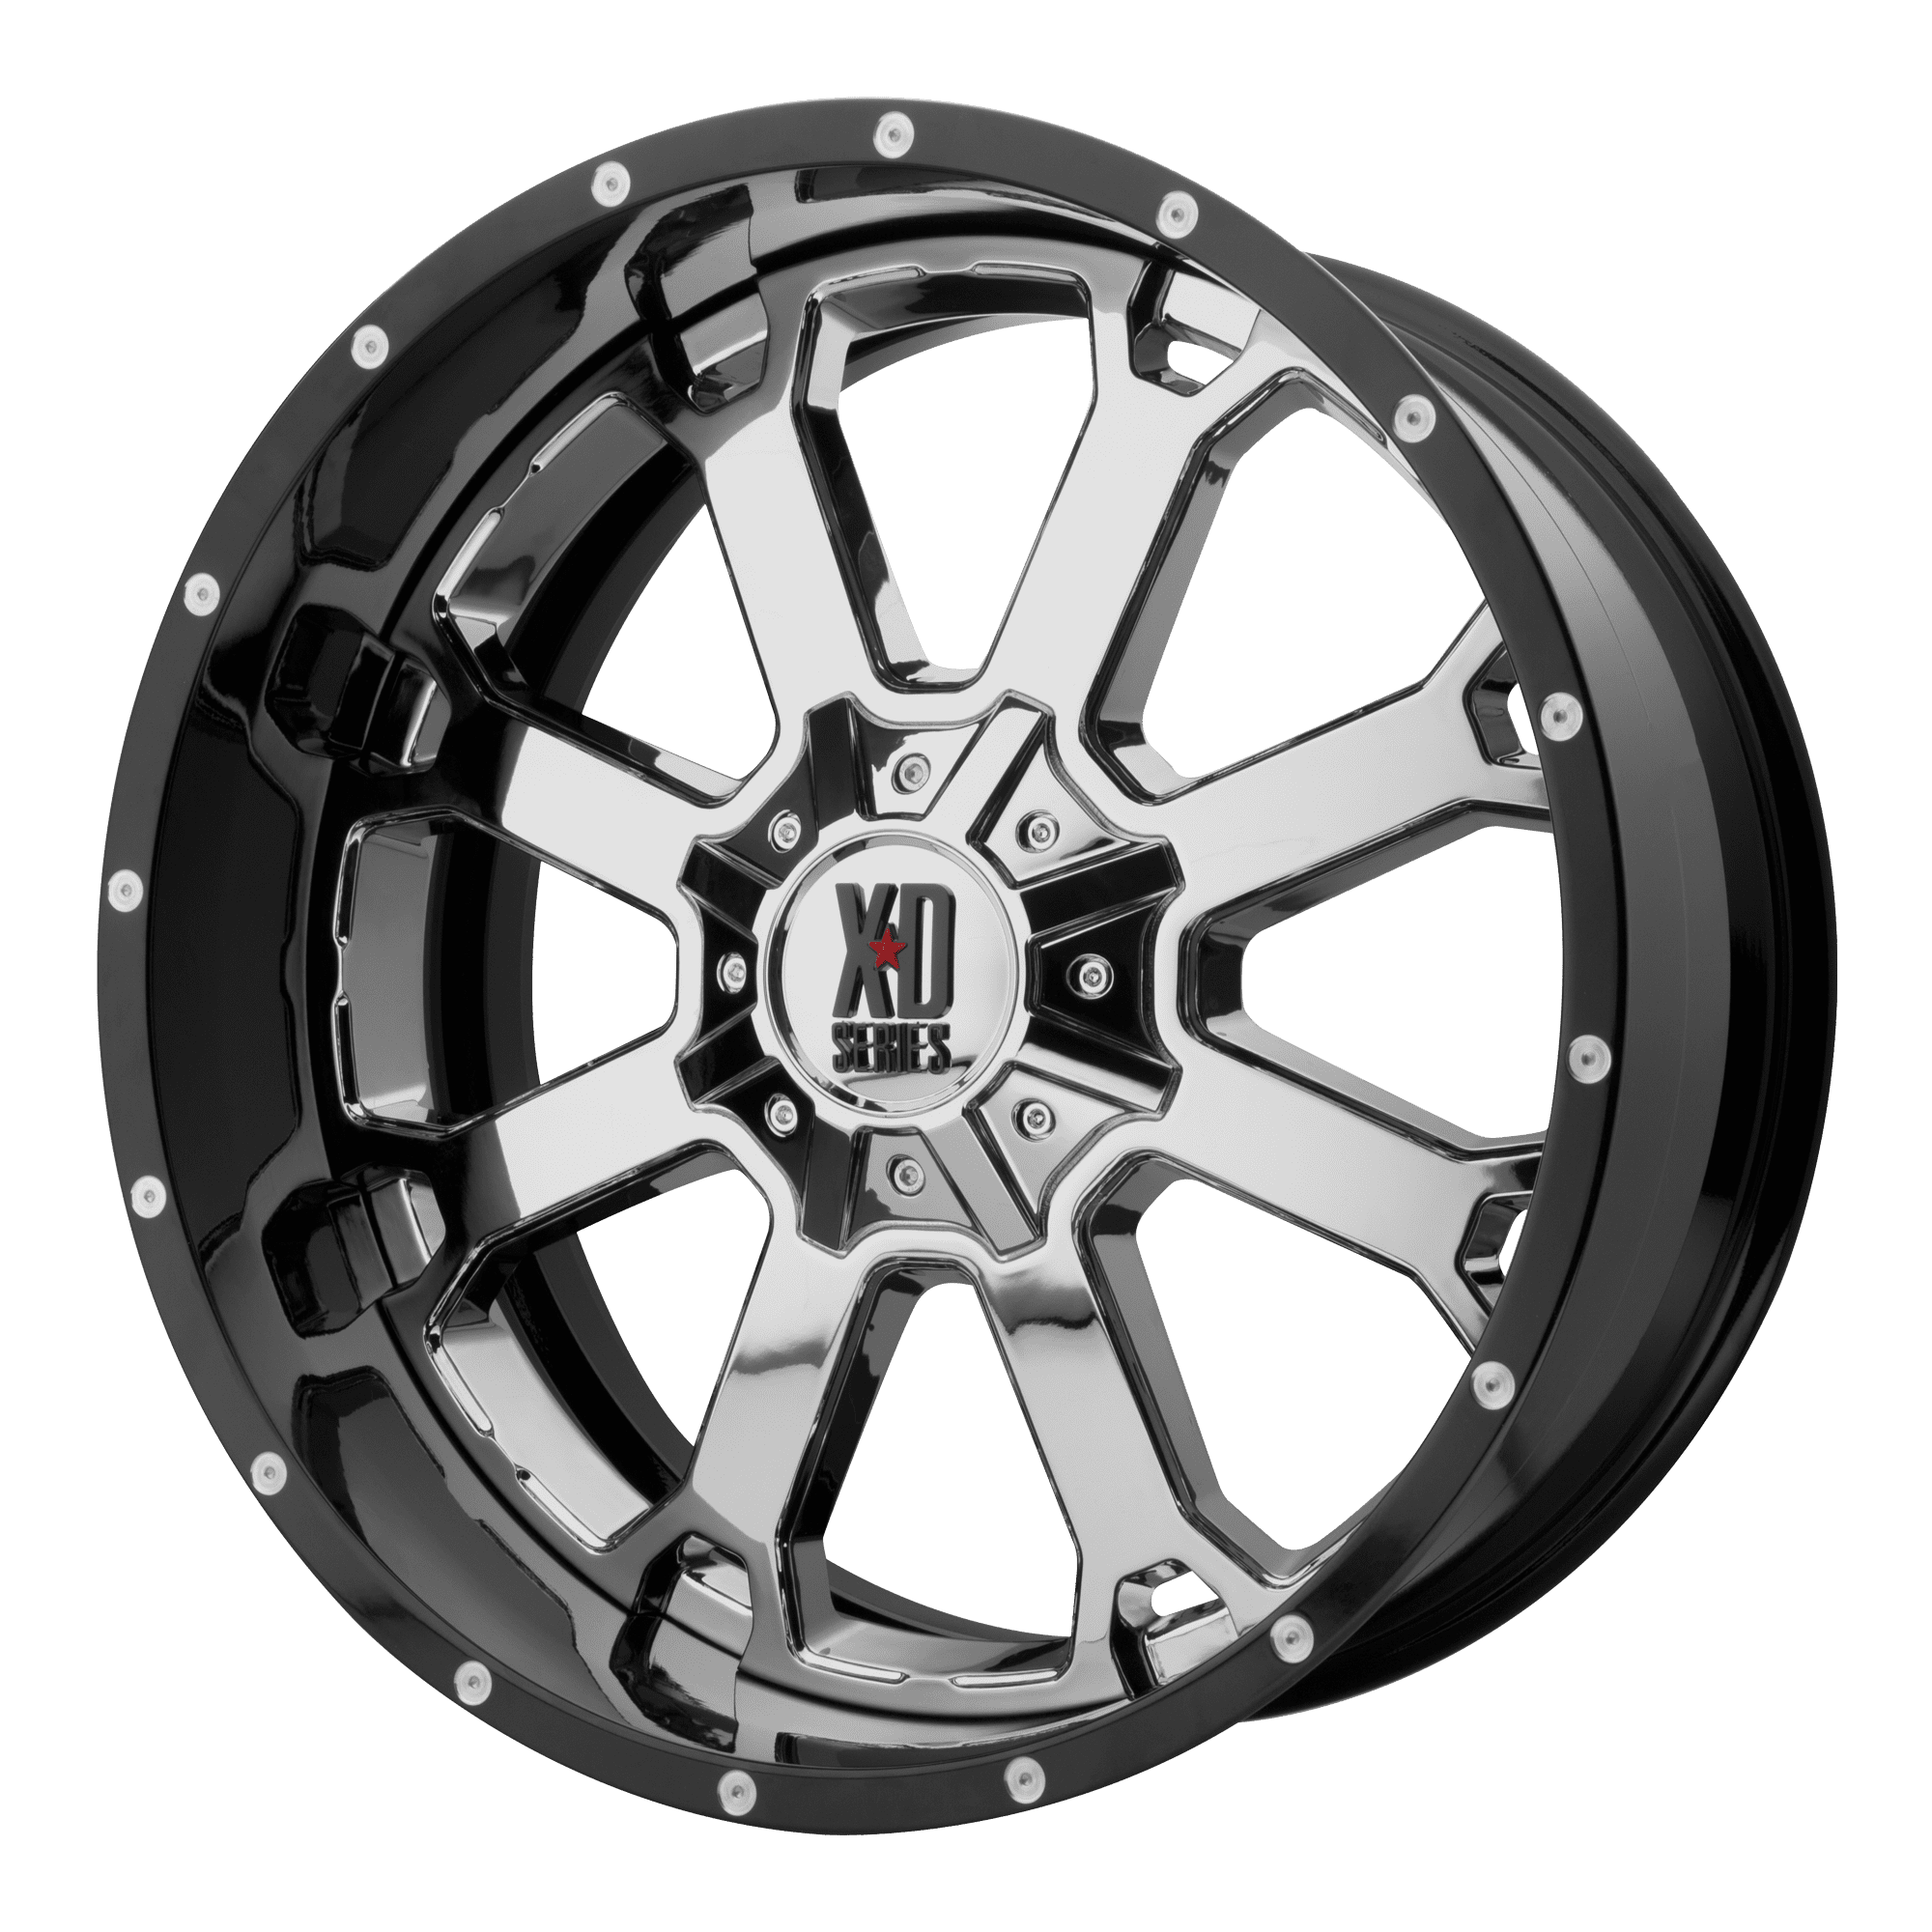 Xd Series By Kmc Wheels Buck 25 20x10 6x13500 Chrome Center W Gloss